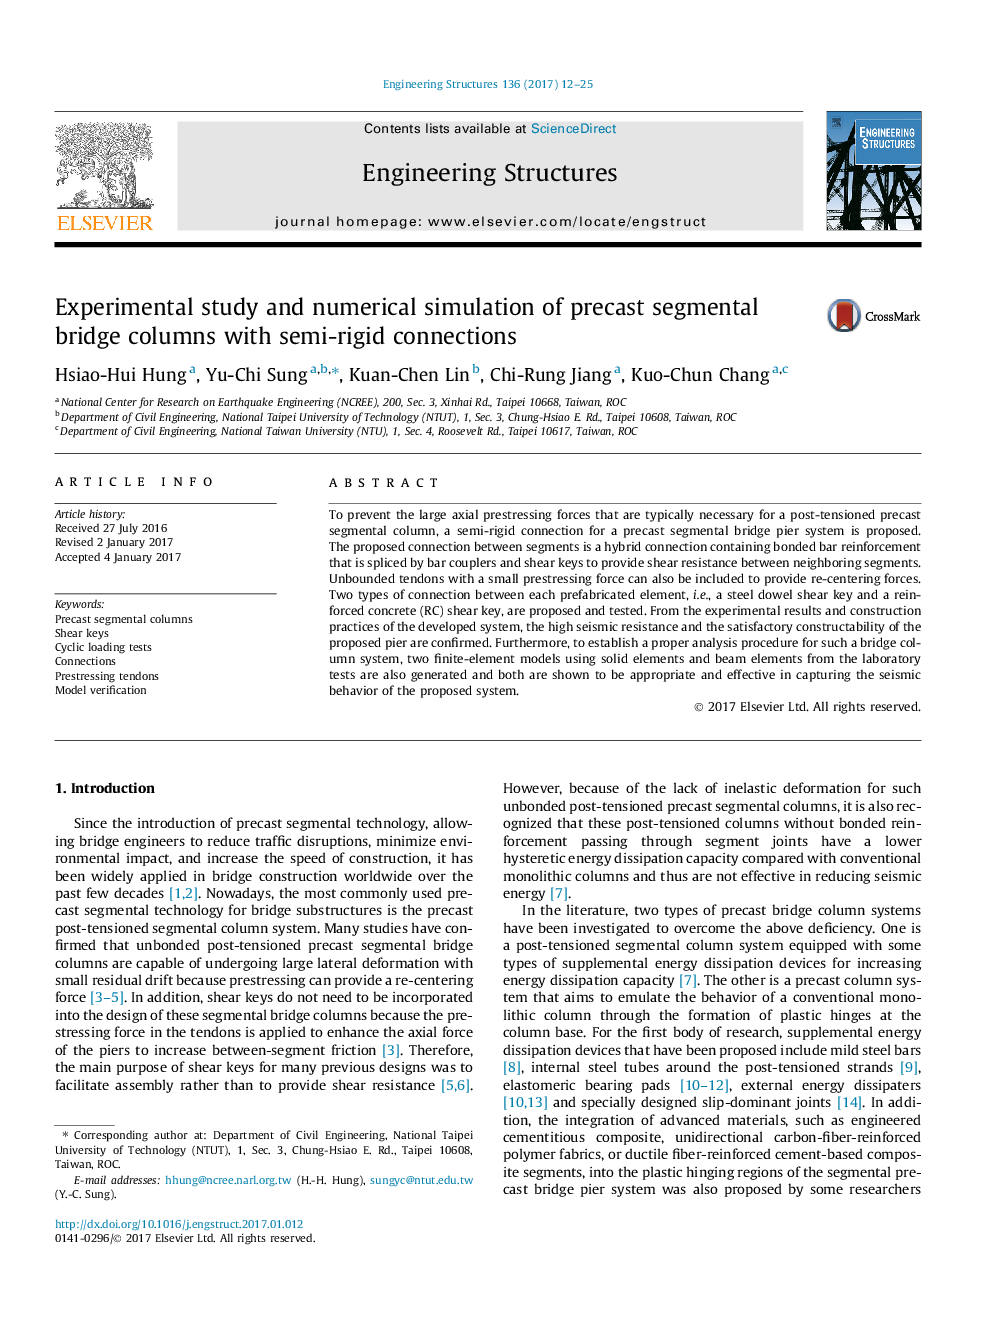 Experimental study and numerical simulation of precast segmental bridge columns with semi-rigid connections